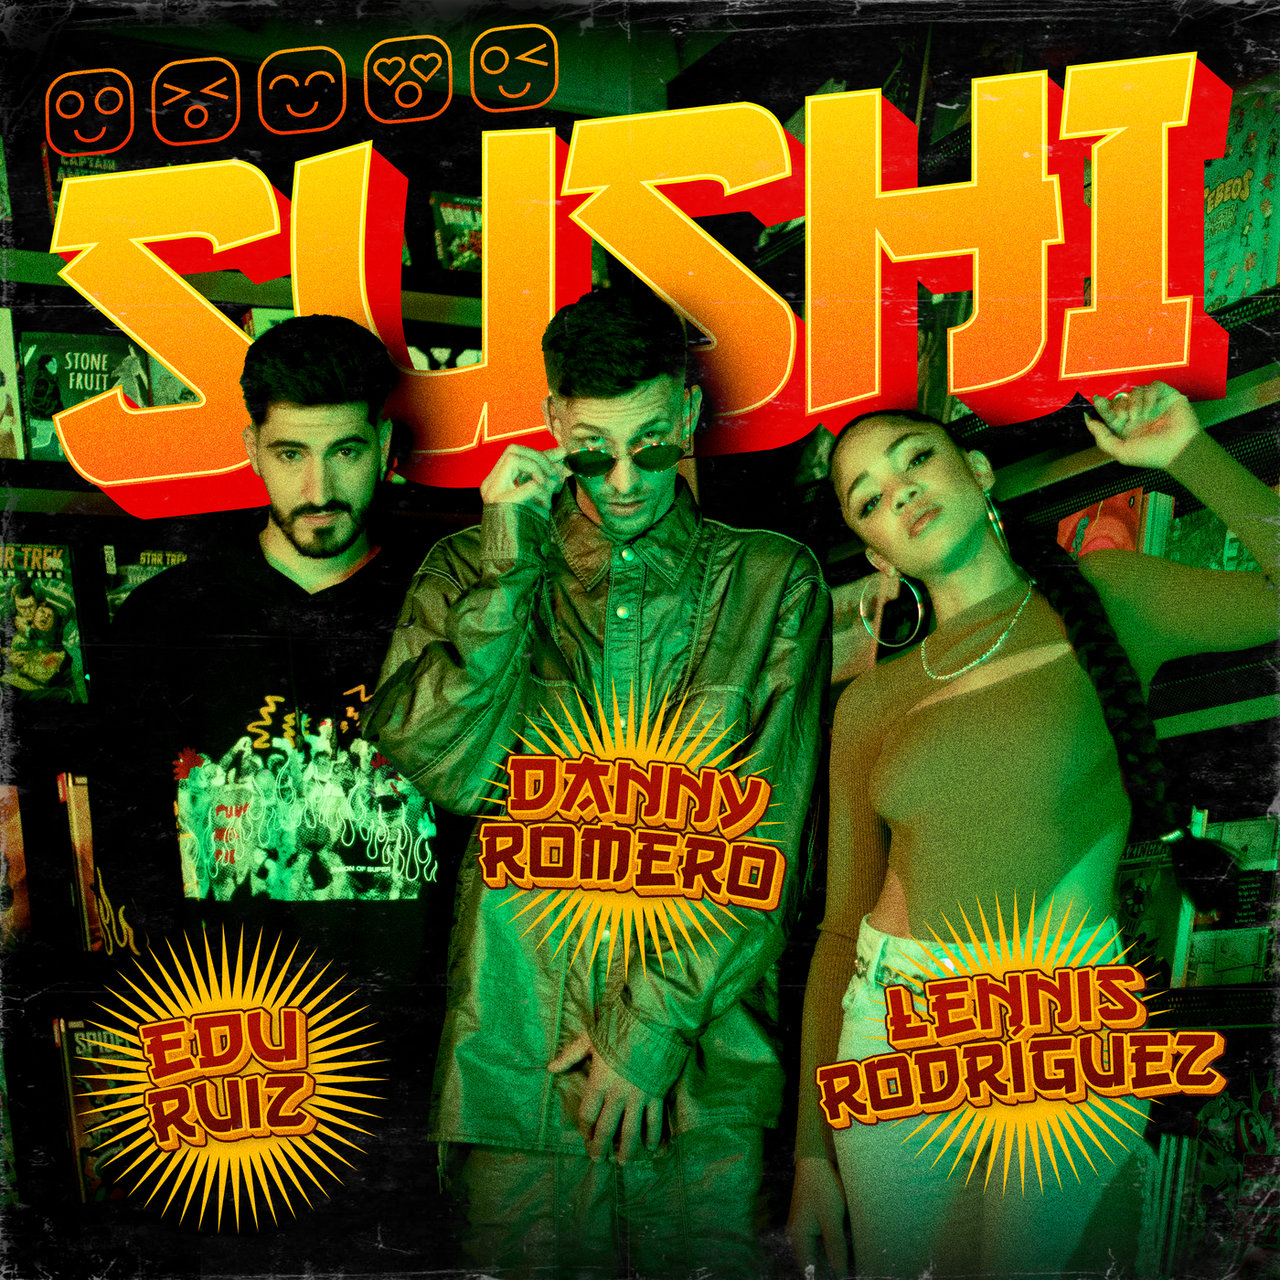 Danny Romero, Lennis Rodriguez, & Edu Ruiz — Sushi cover artwork